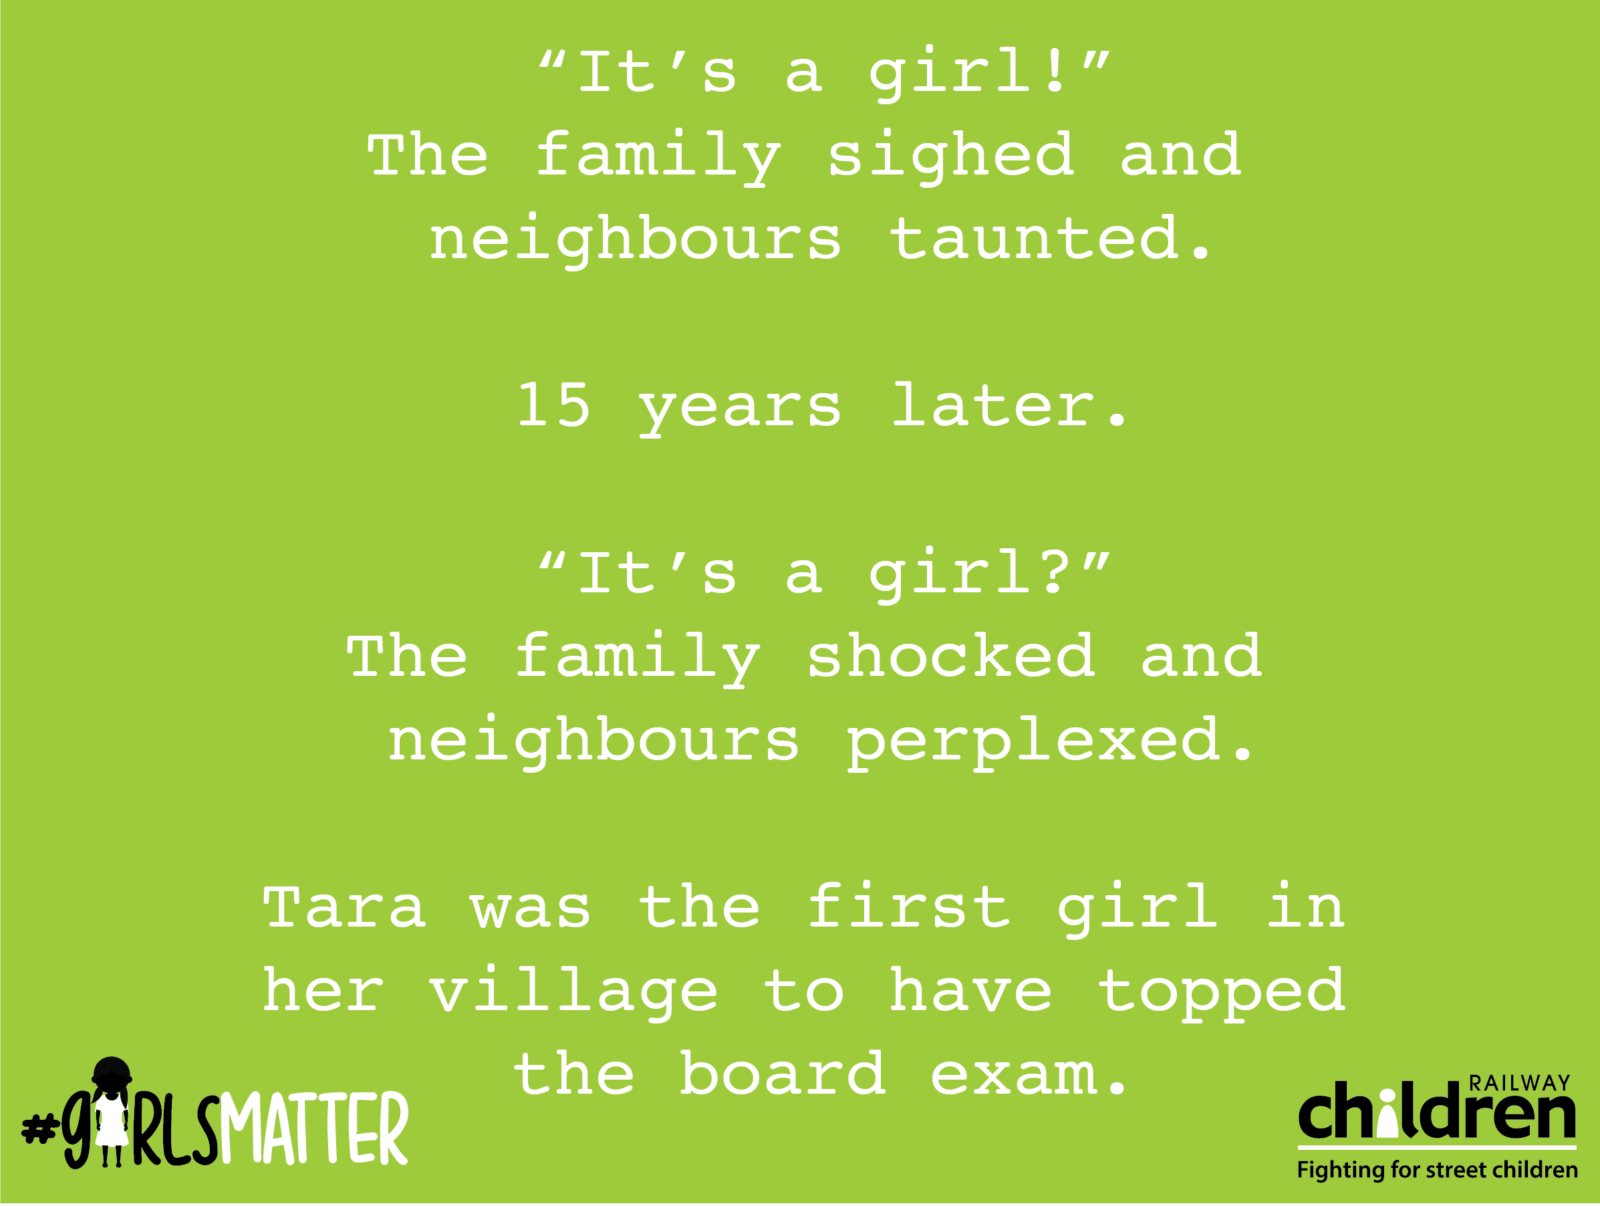 #GirlsMatter - "It's A Girl!"